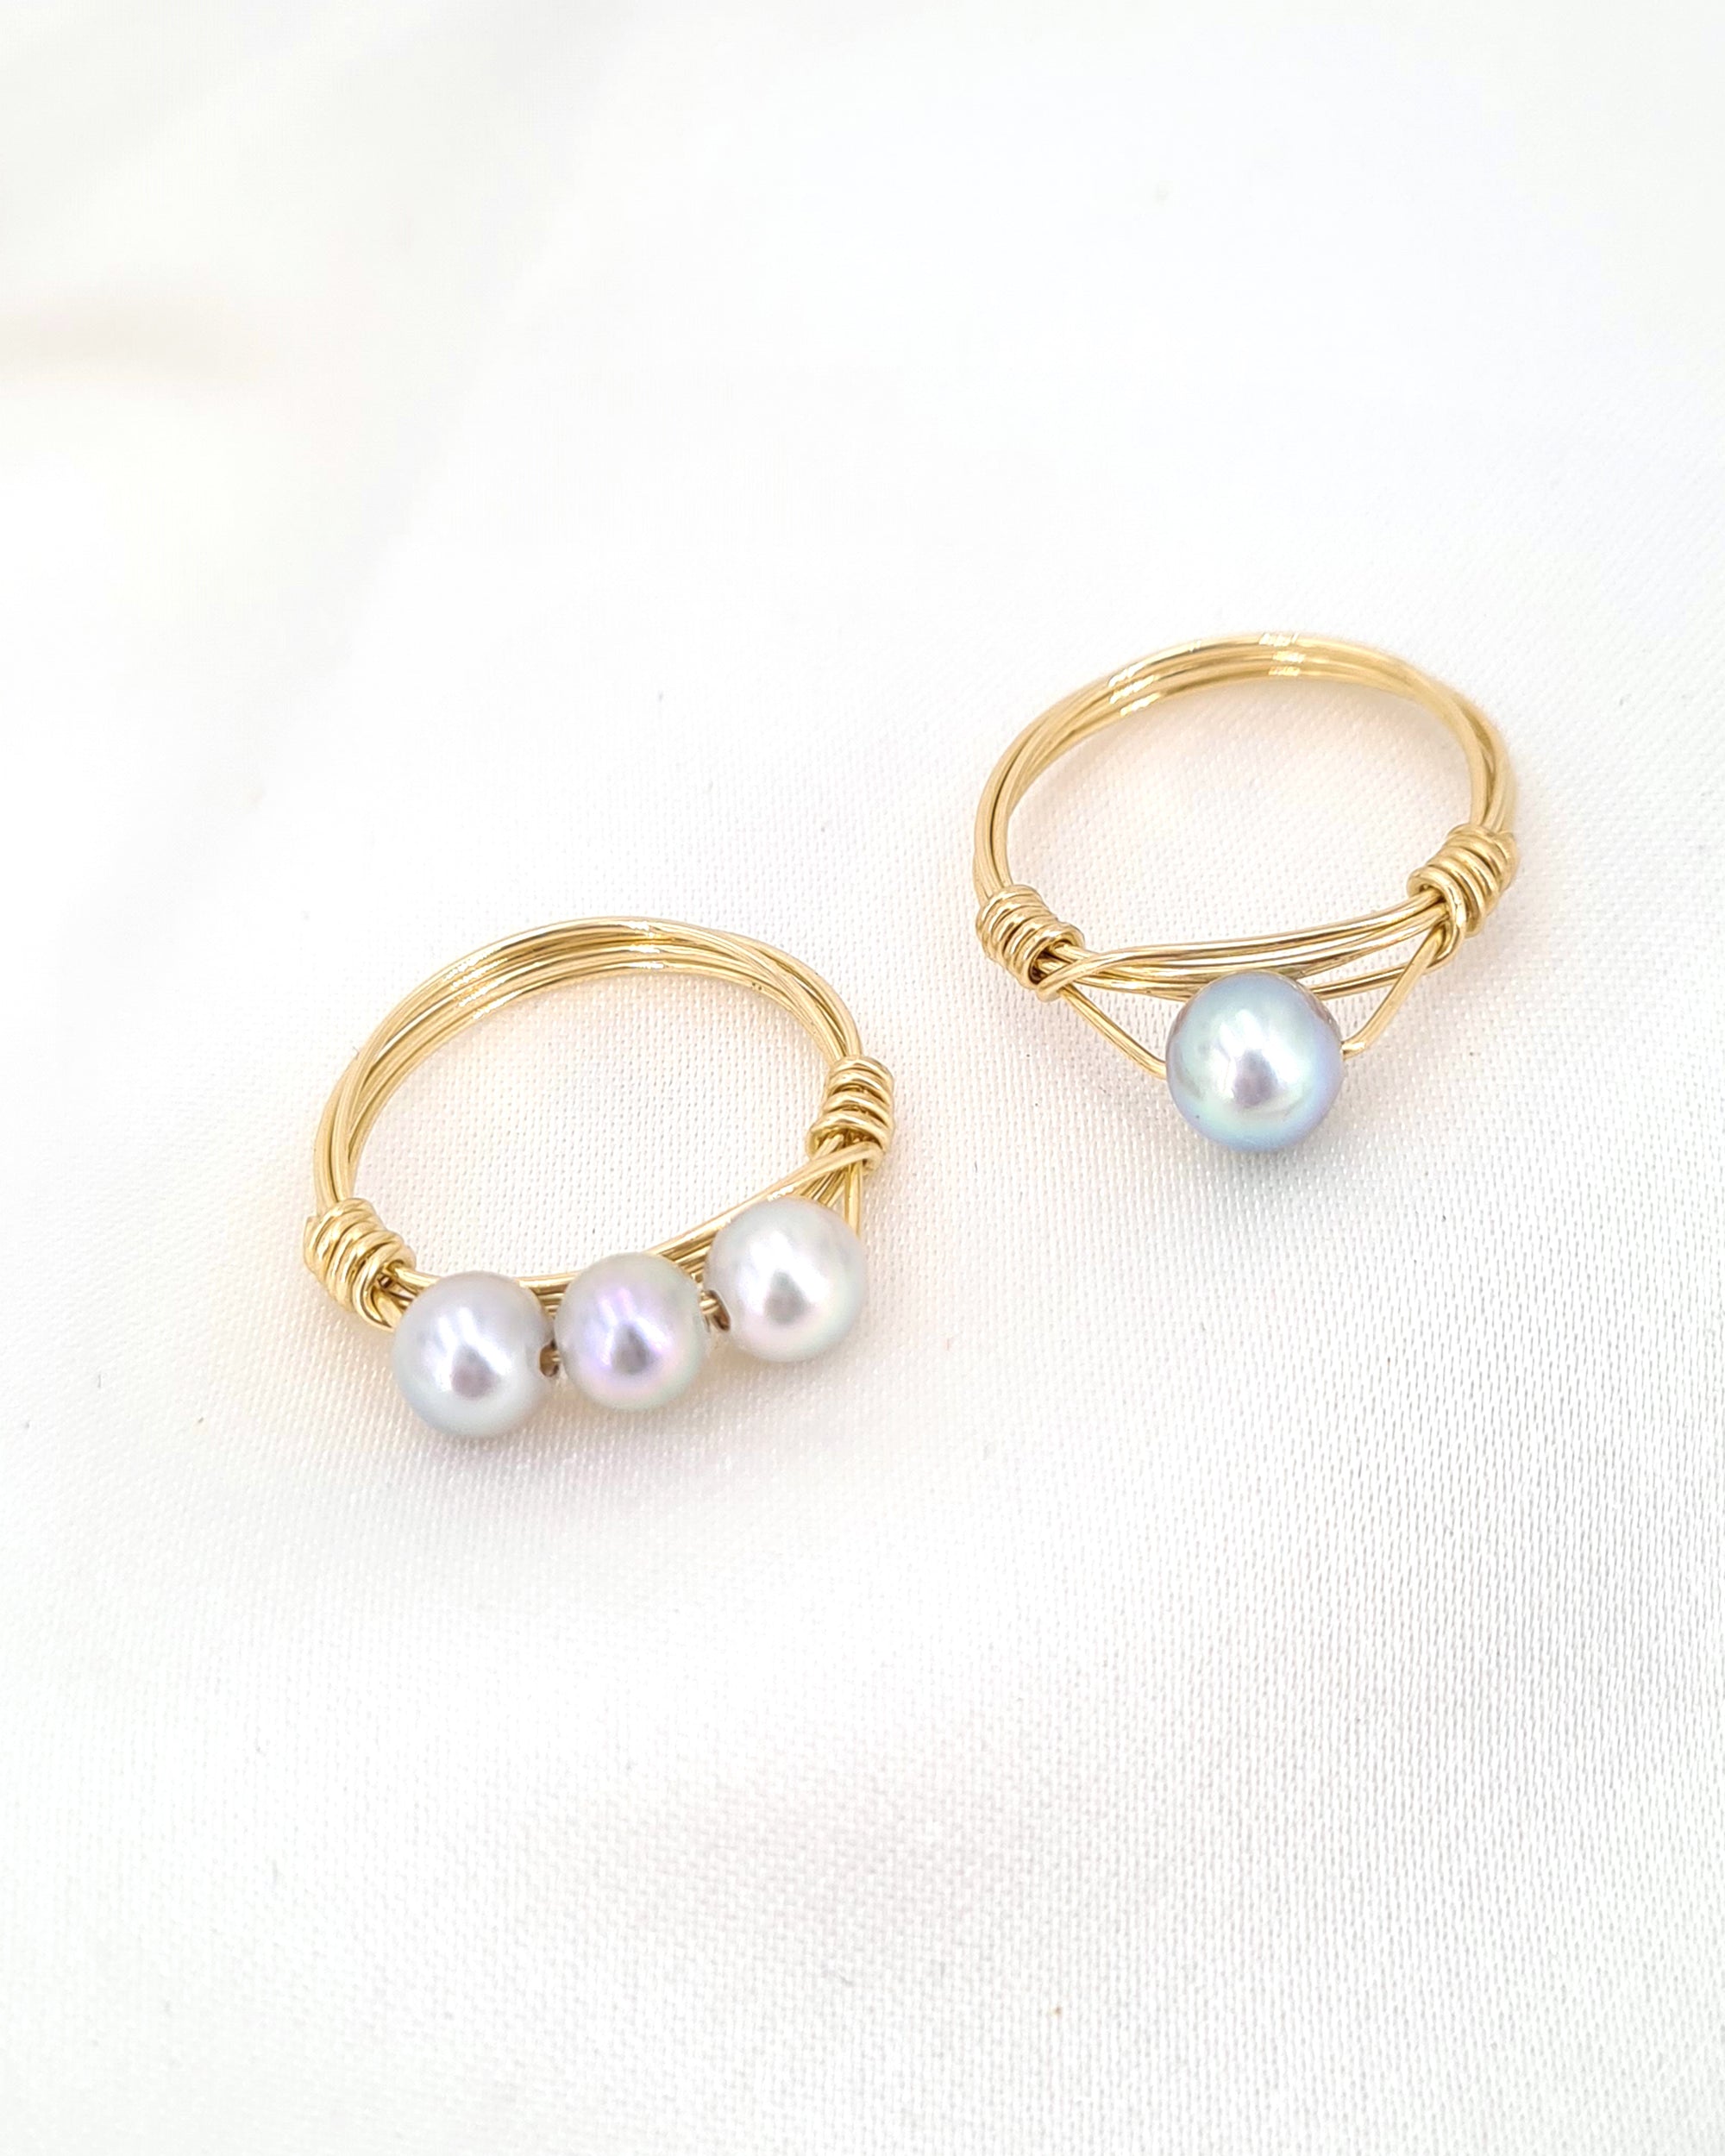 Akoya Pearl Ring - 14K Gold Filled Blue Akoya Pearl Ring